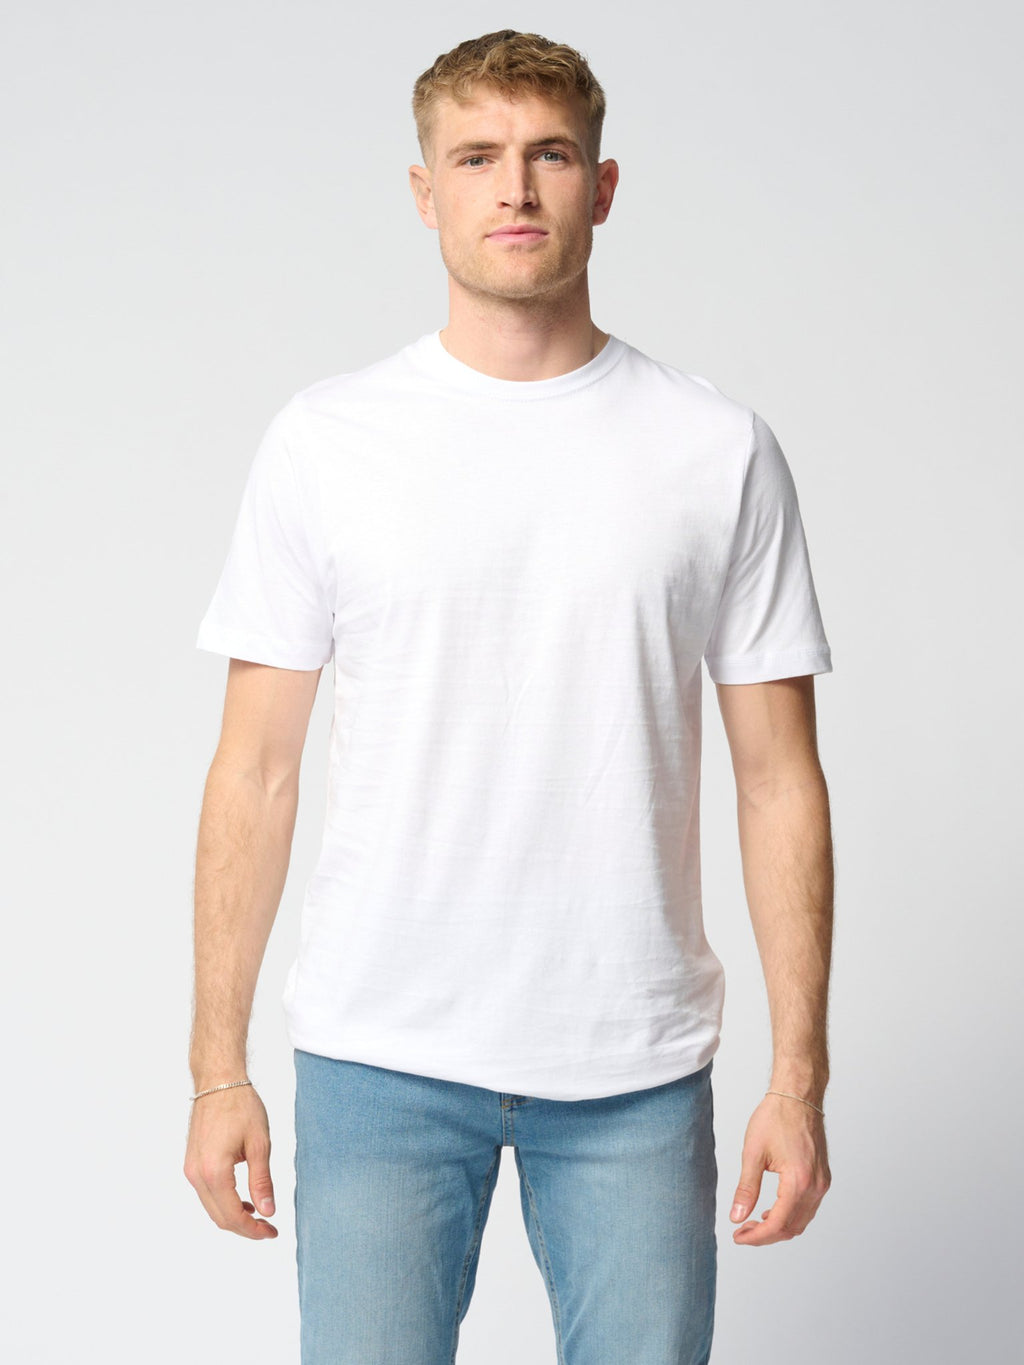 Organic Basic T-Shirts - Package Deal (3 pcs.)